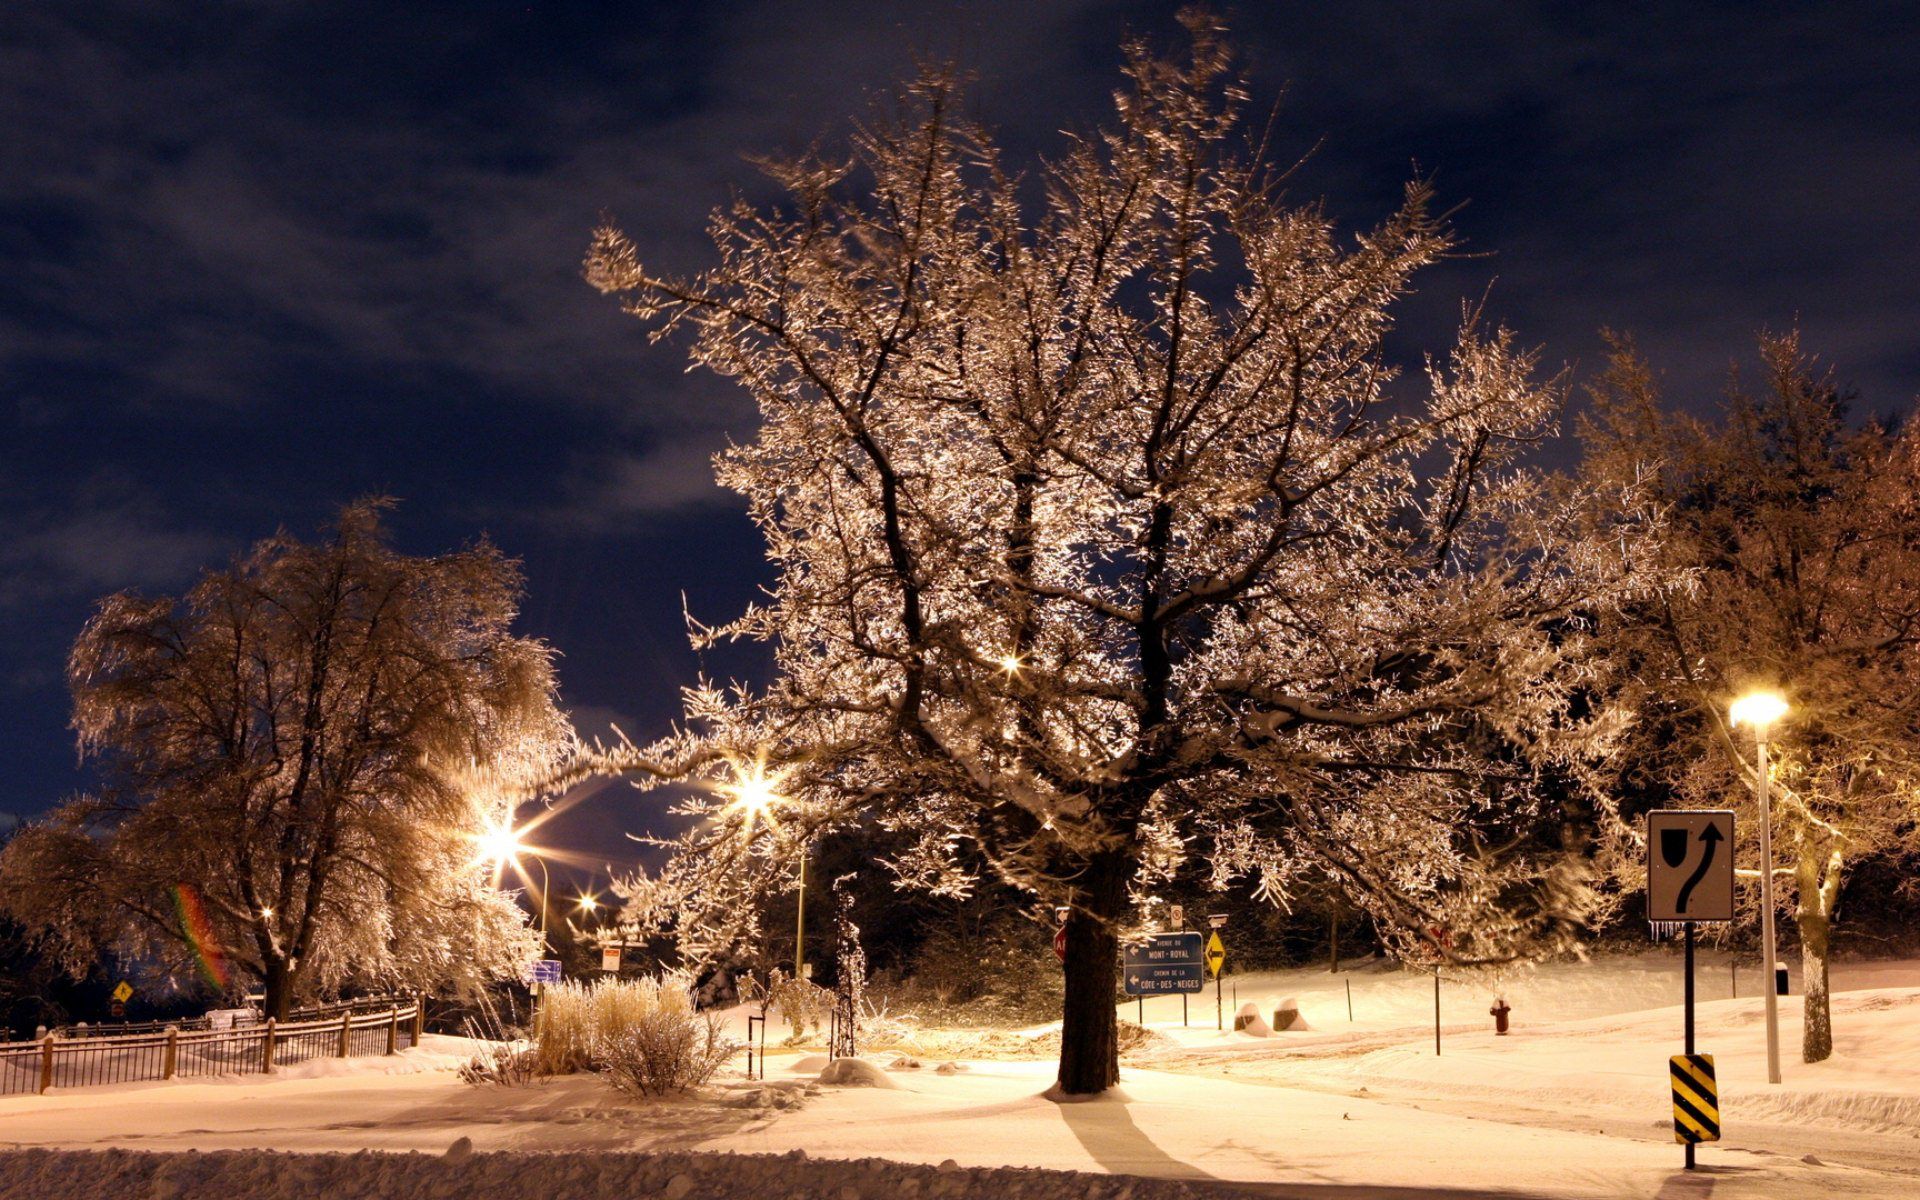 Amazing Set of Winter Night HD Wallpapers - Photo 7 of 25 phombo.com